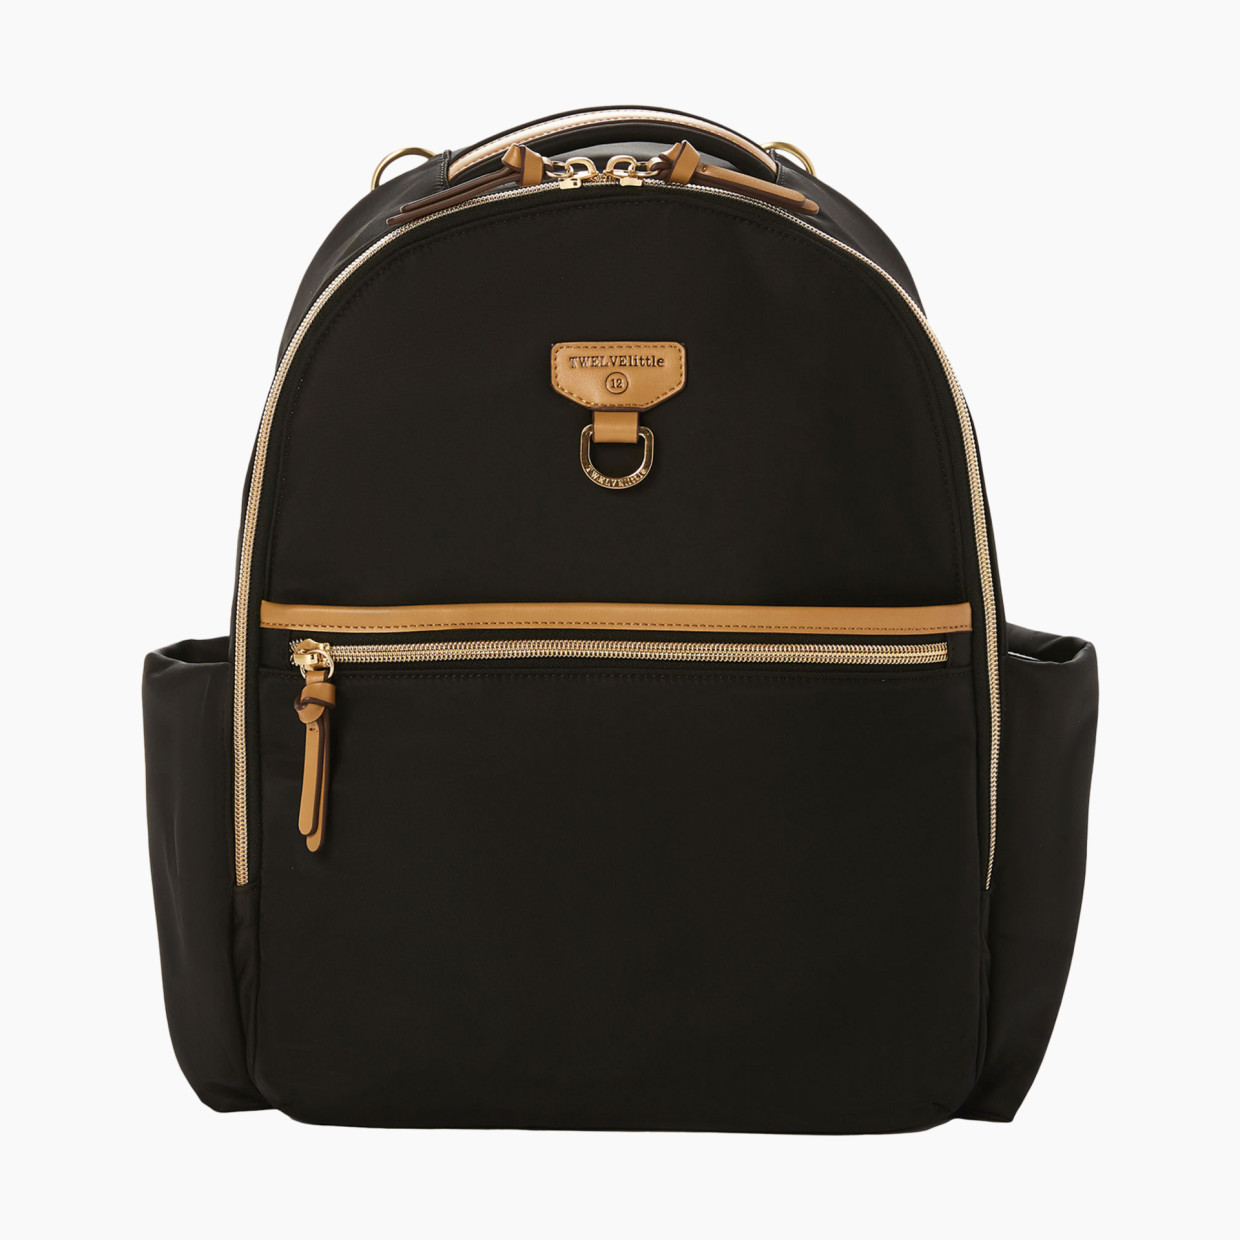 TWELVELittle Midi-Go Diaper Bag Backpack 3.0 - Black Tan.